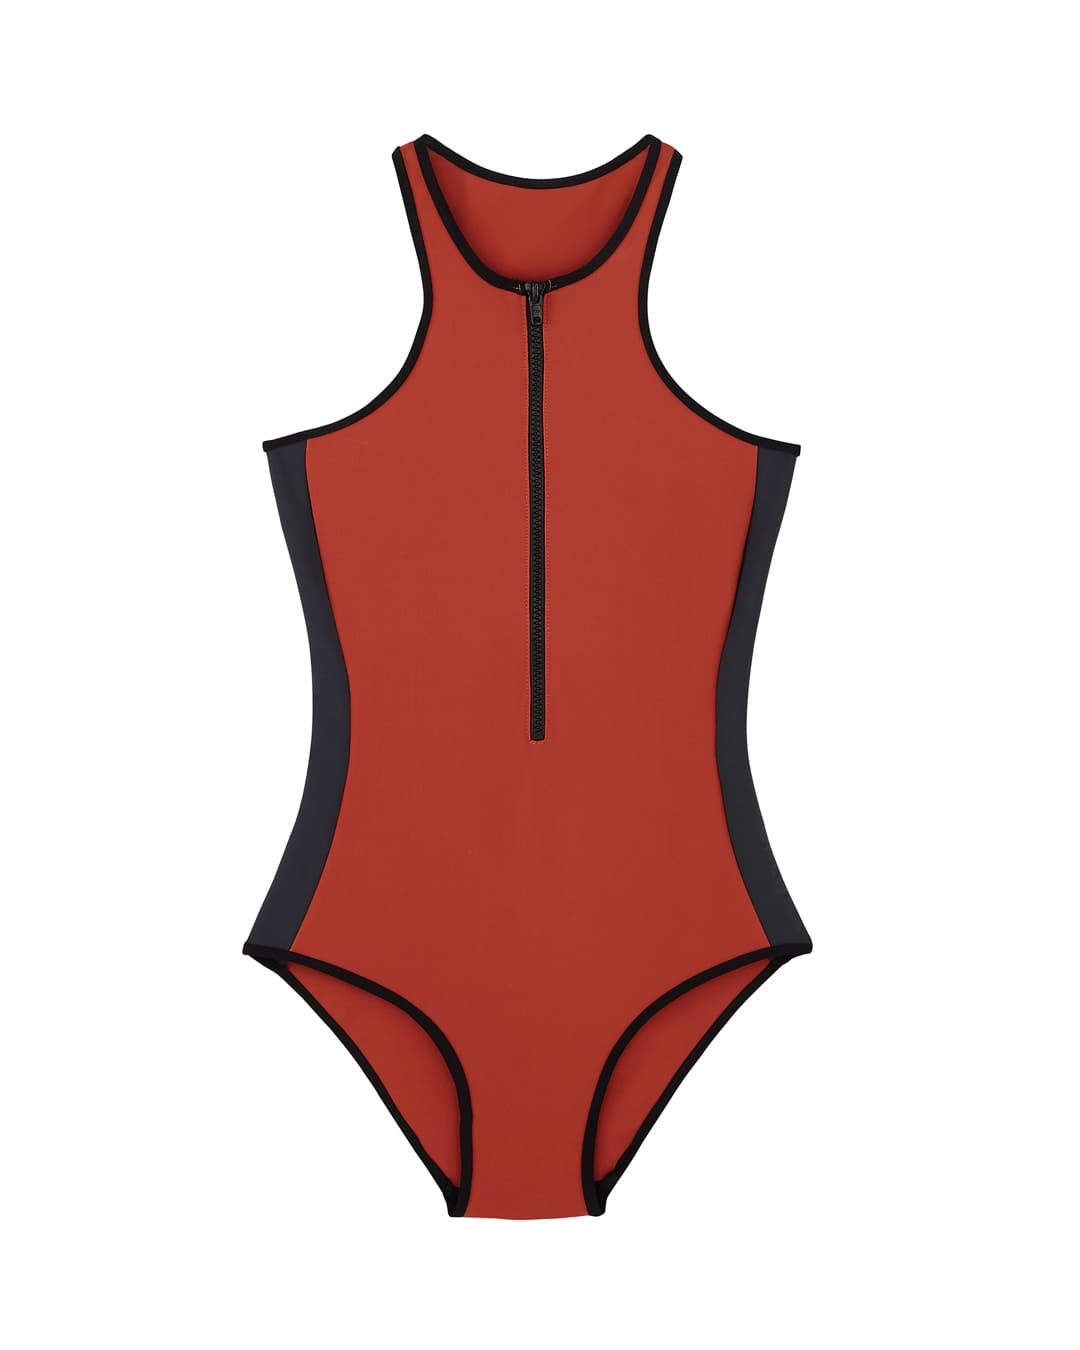 CHLORE Women's 1 Piece Racerback Zipped Swimsuit Brick